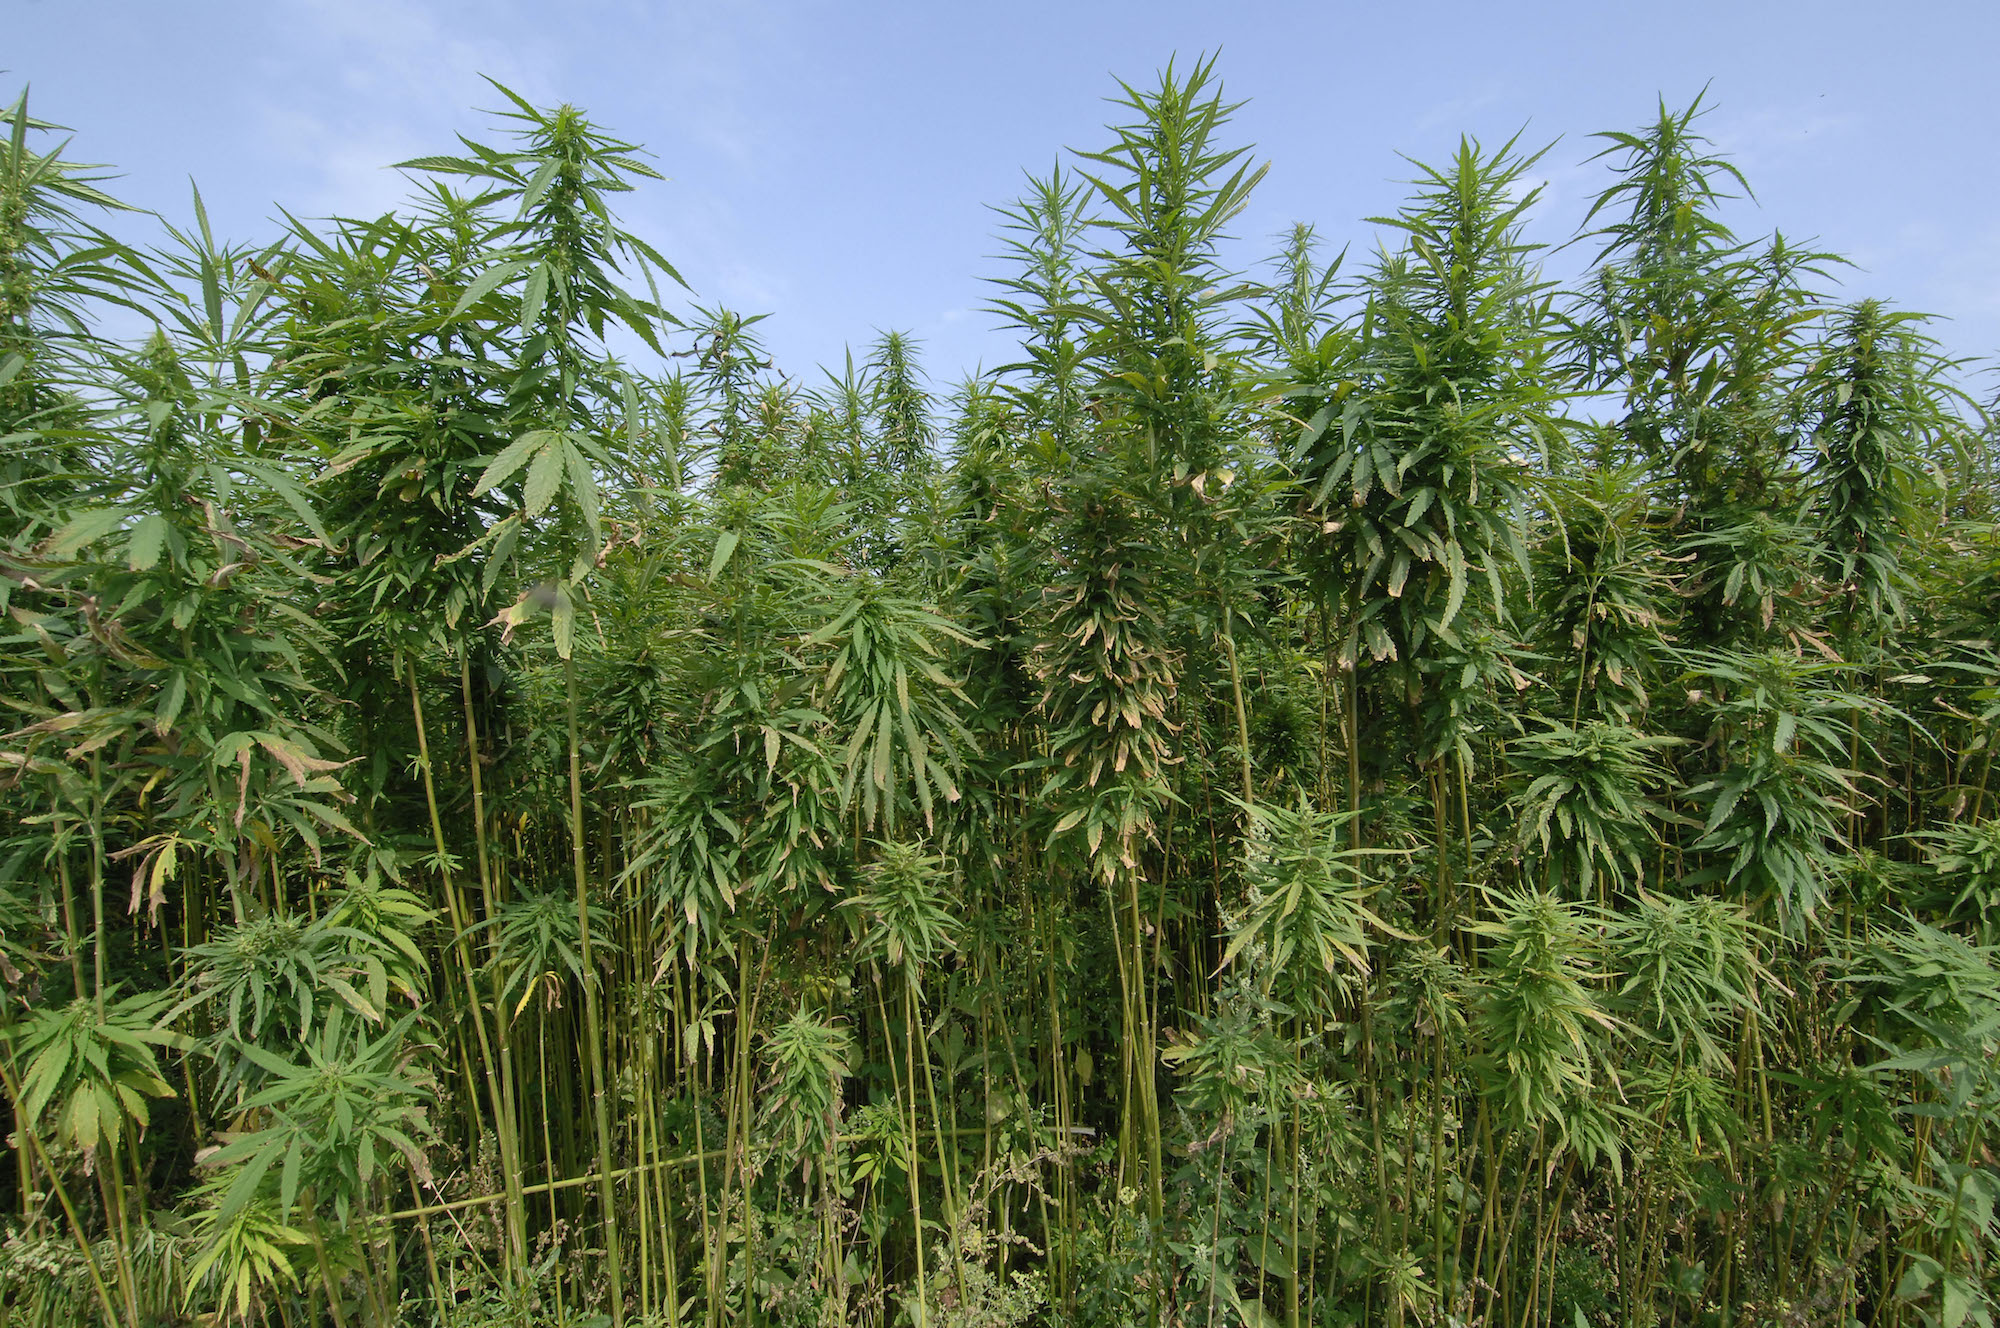 a photo of tall, green stalks of hemp against a blue sky